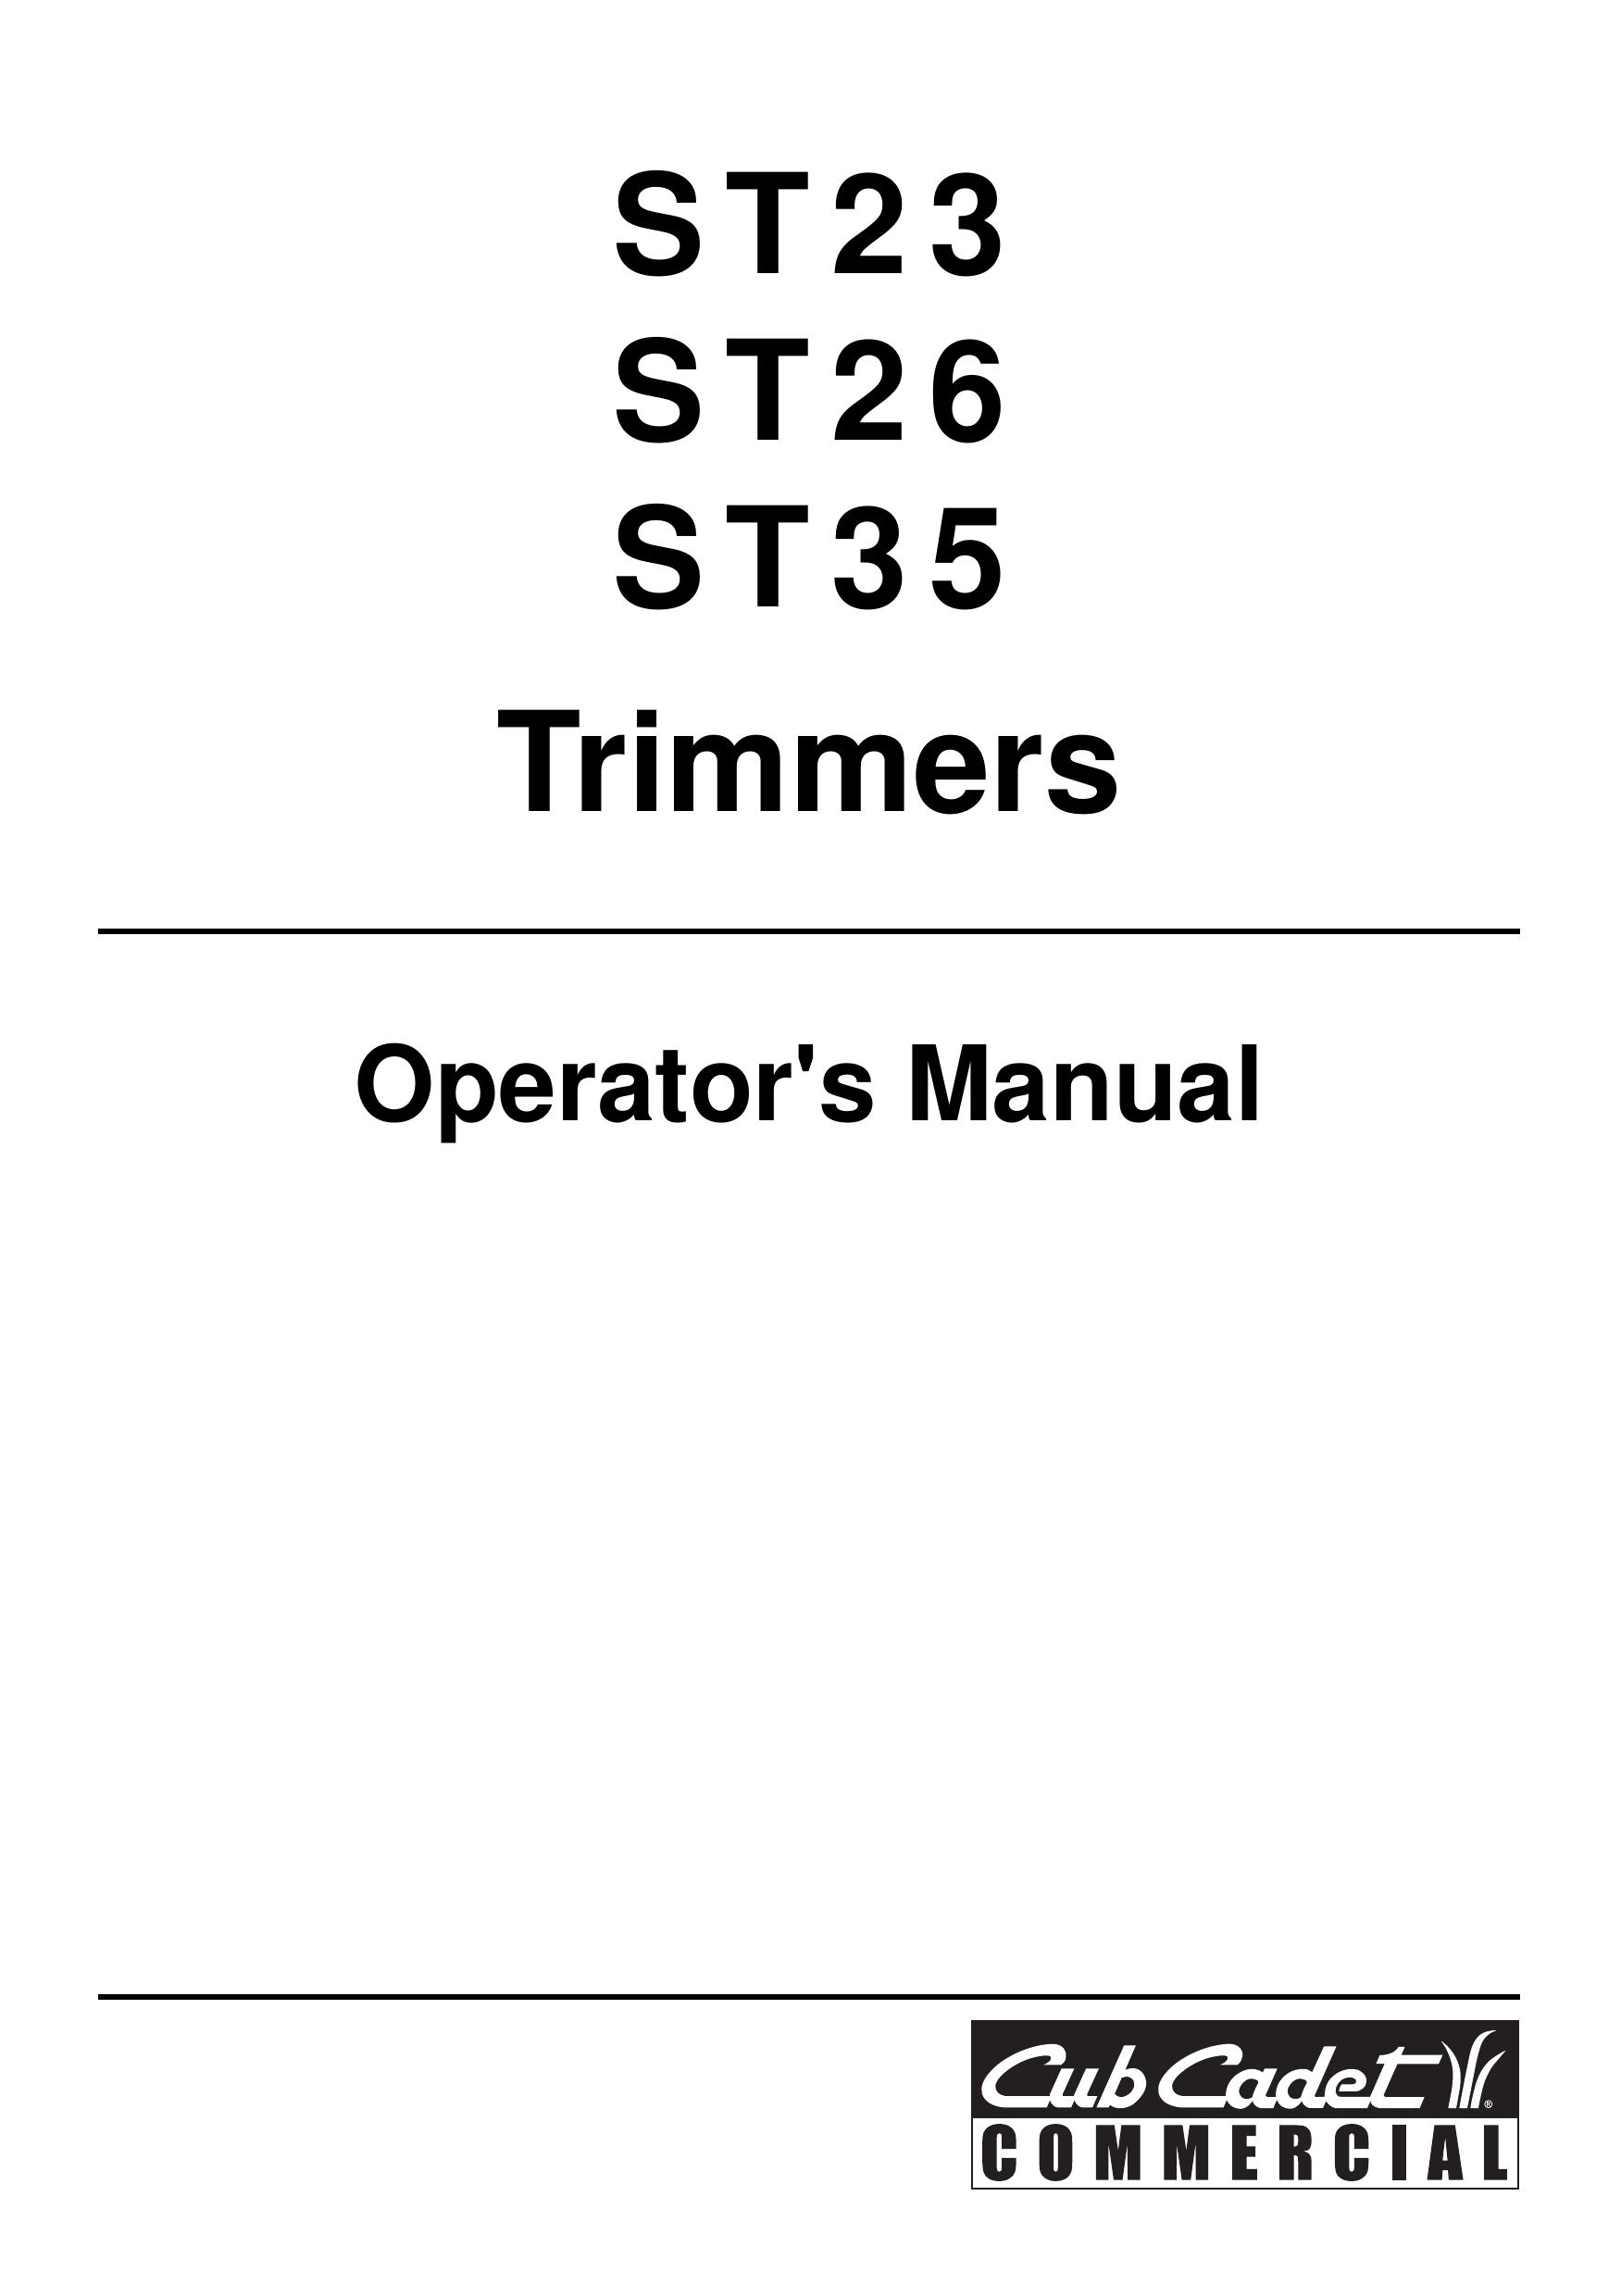 Cub Cadet ST23 Trimmer User Manual